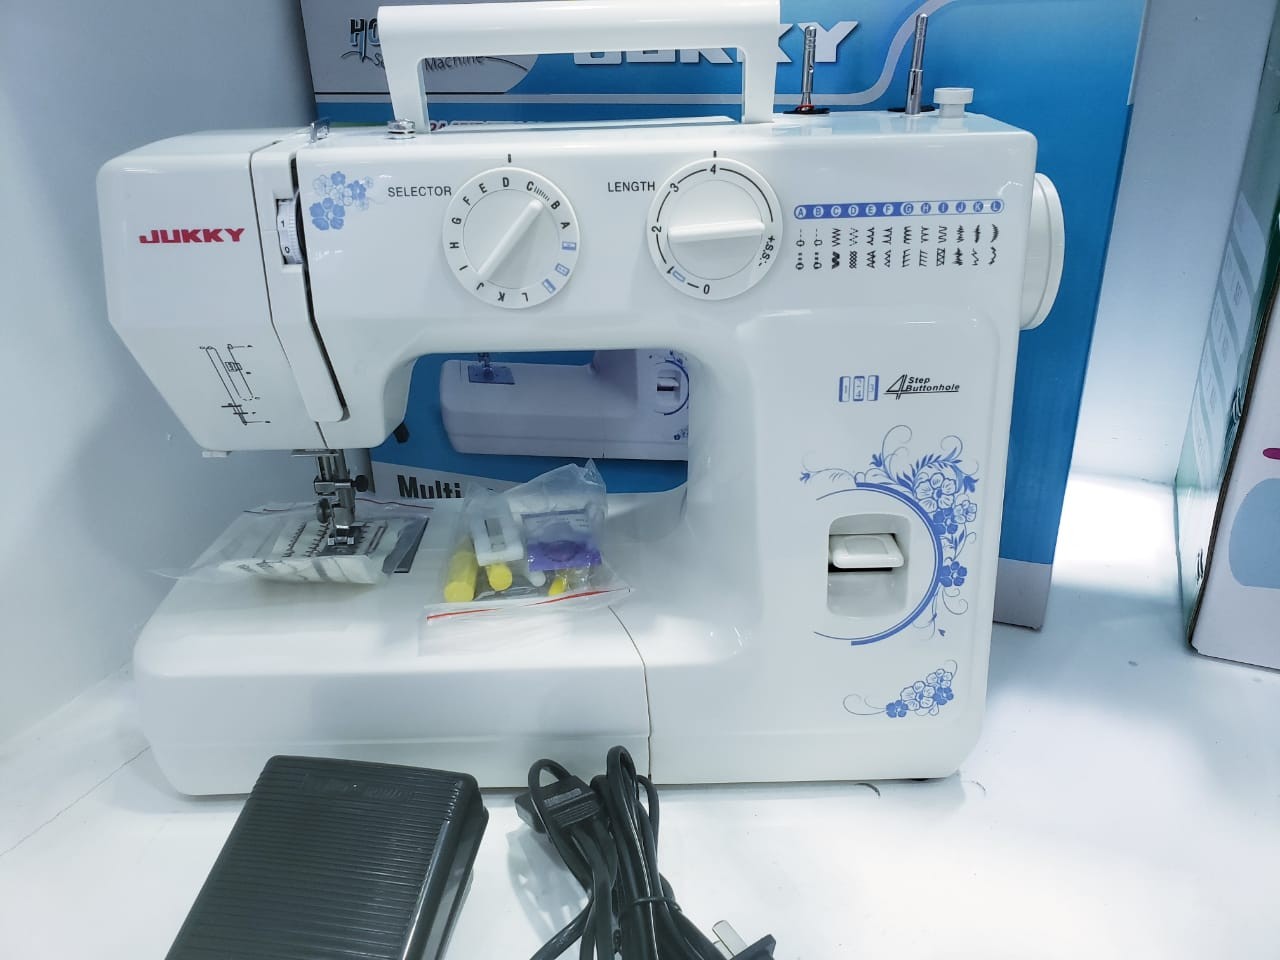 electrodomesticos - Maquina de coser Electrica multifuncional profesional JUKKY FH6224 8